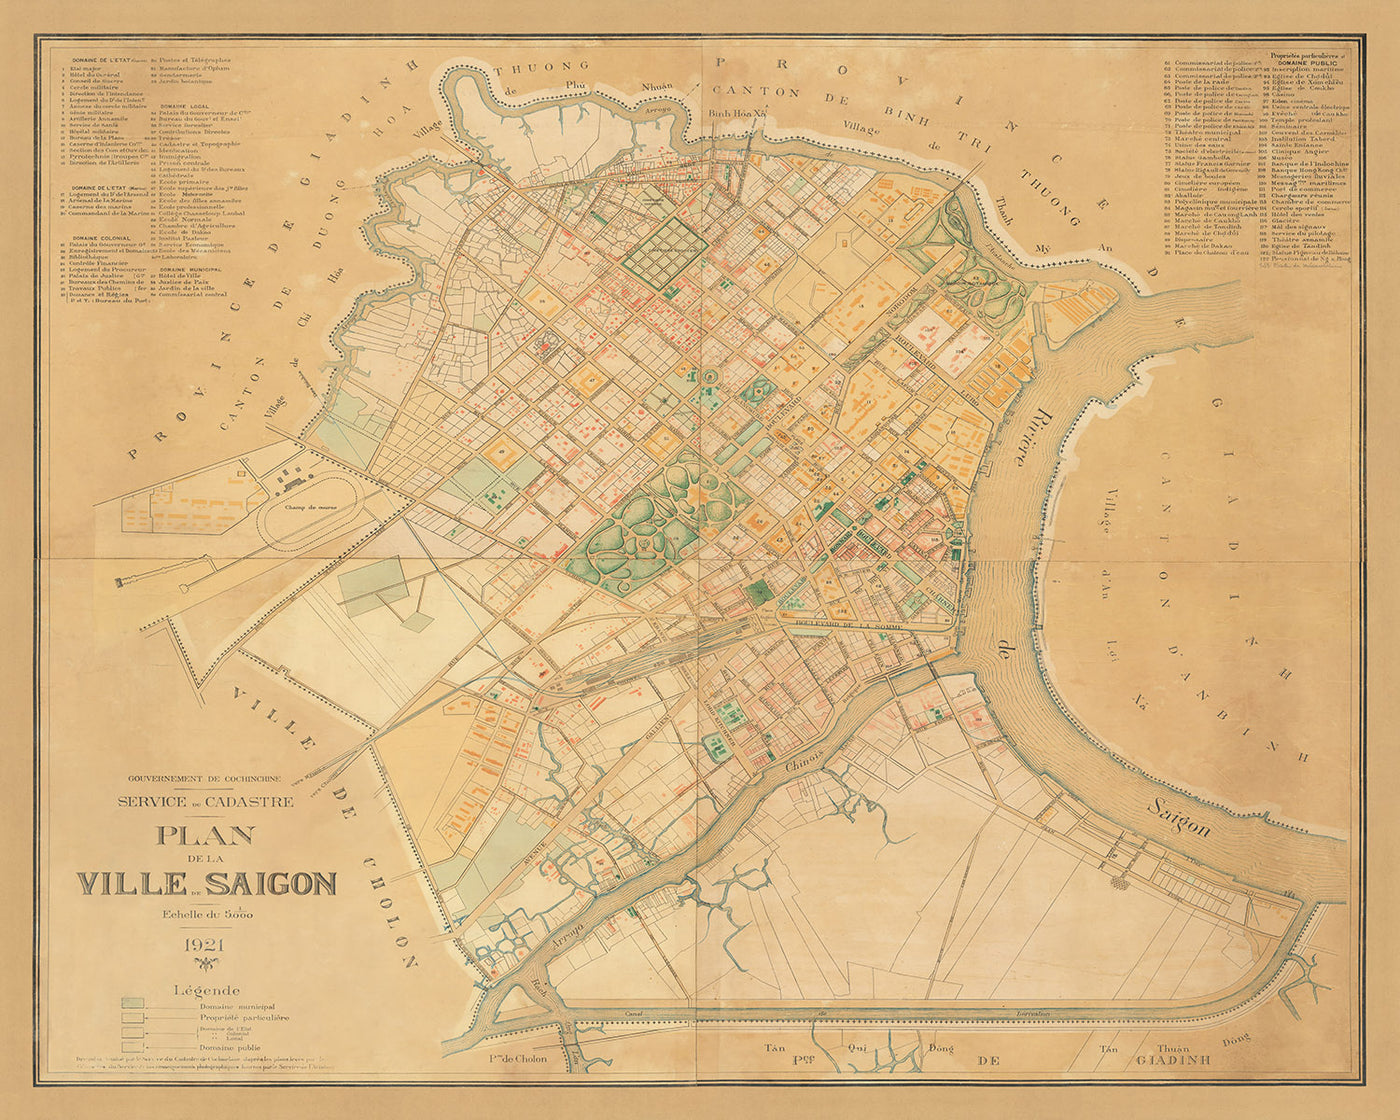 Old Map of Saigon (Ho Chi Minh City), 1921: Colonial Urban Plan, Saigon River, French Architecture, Historic Streets